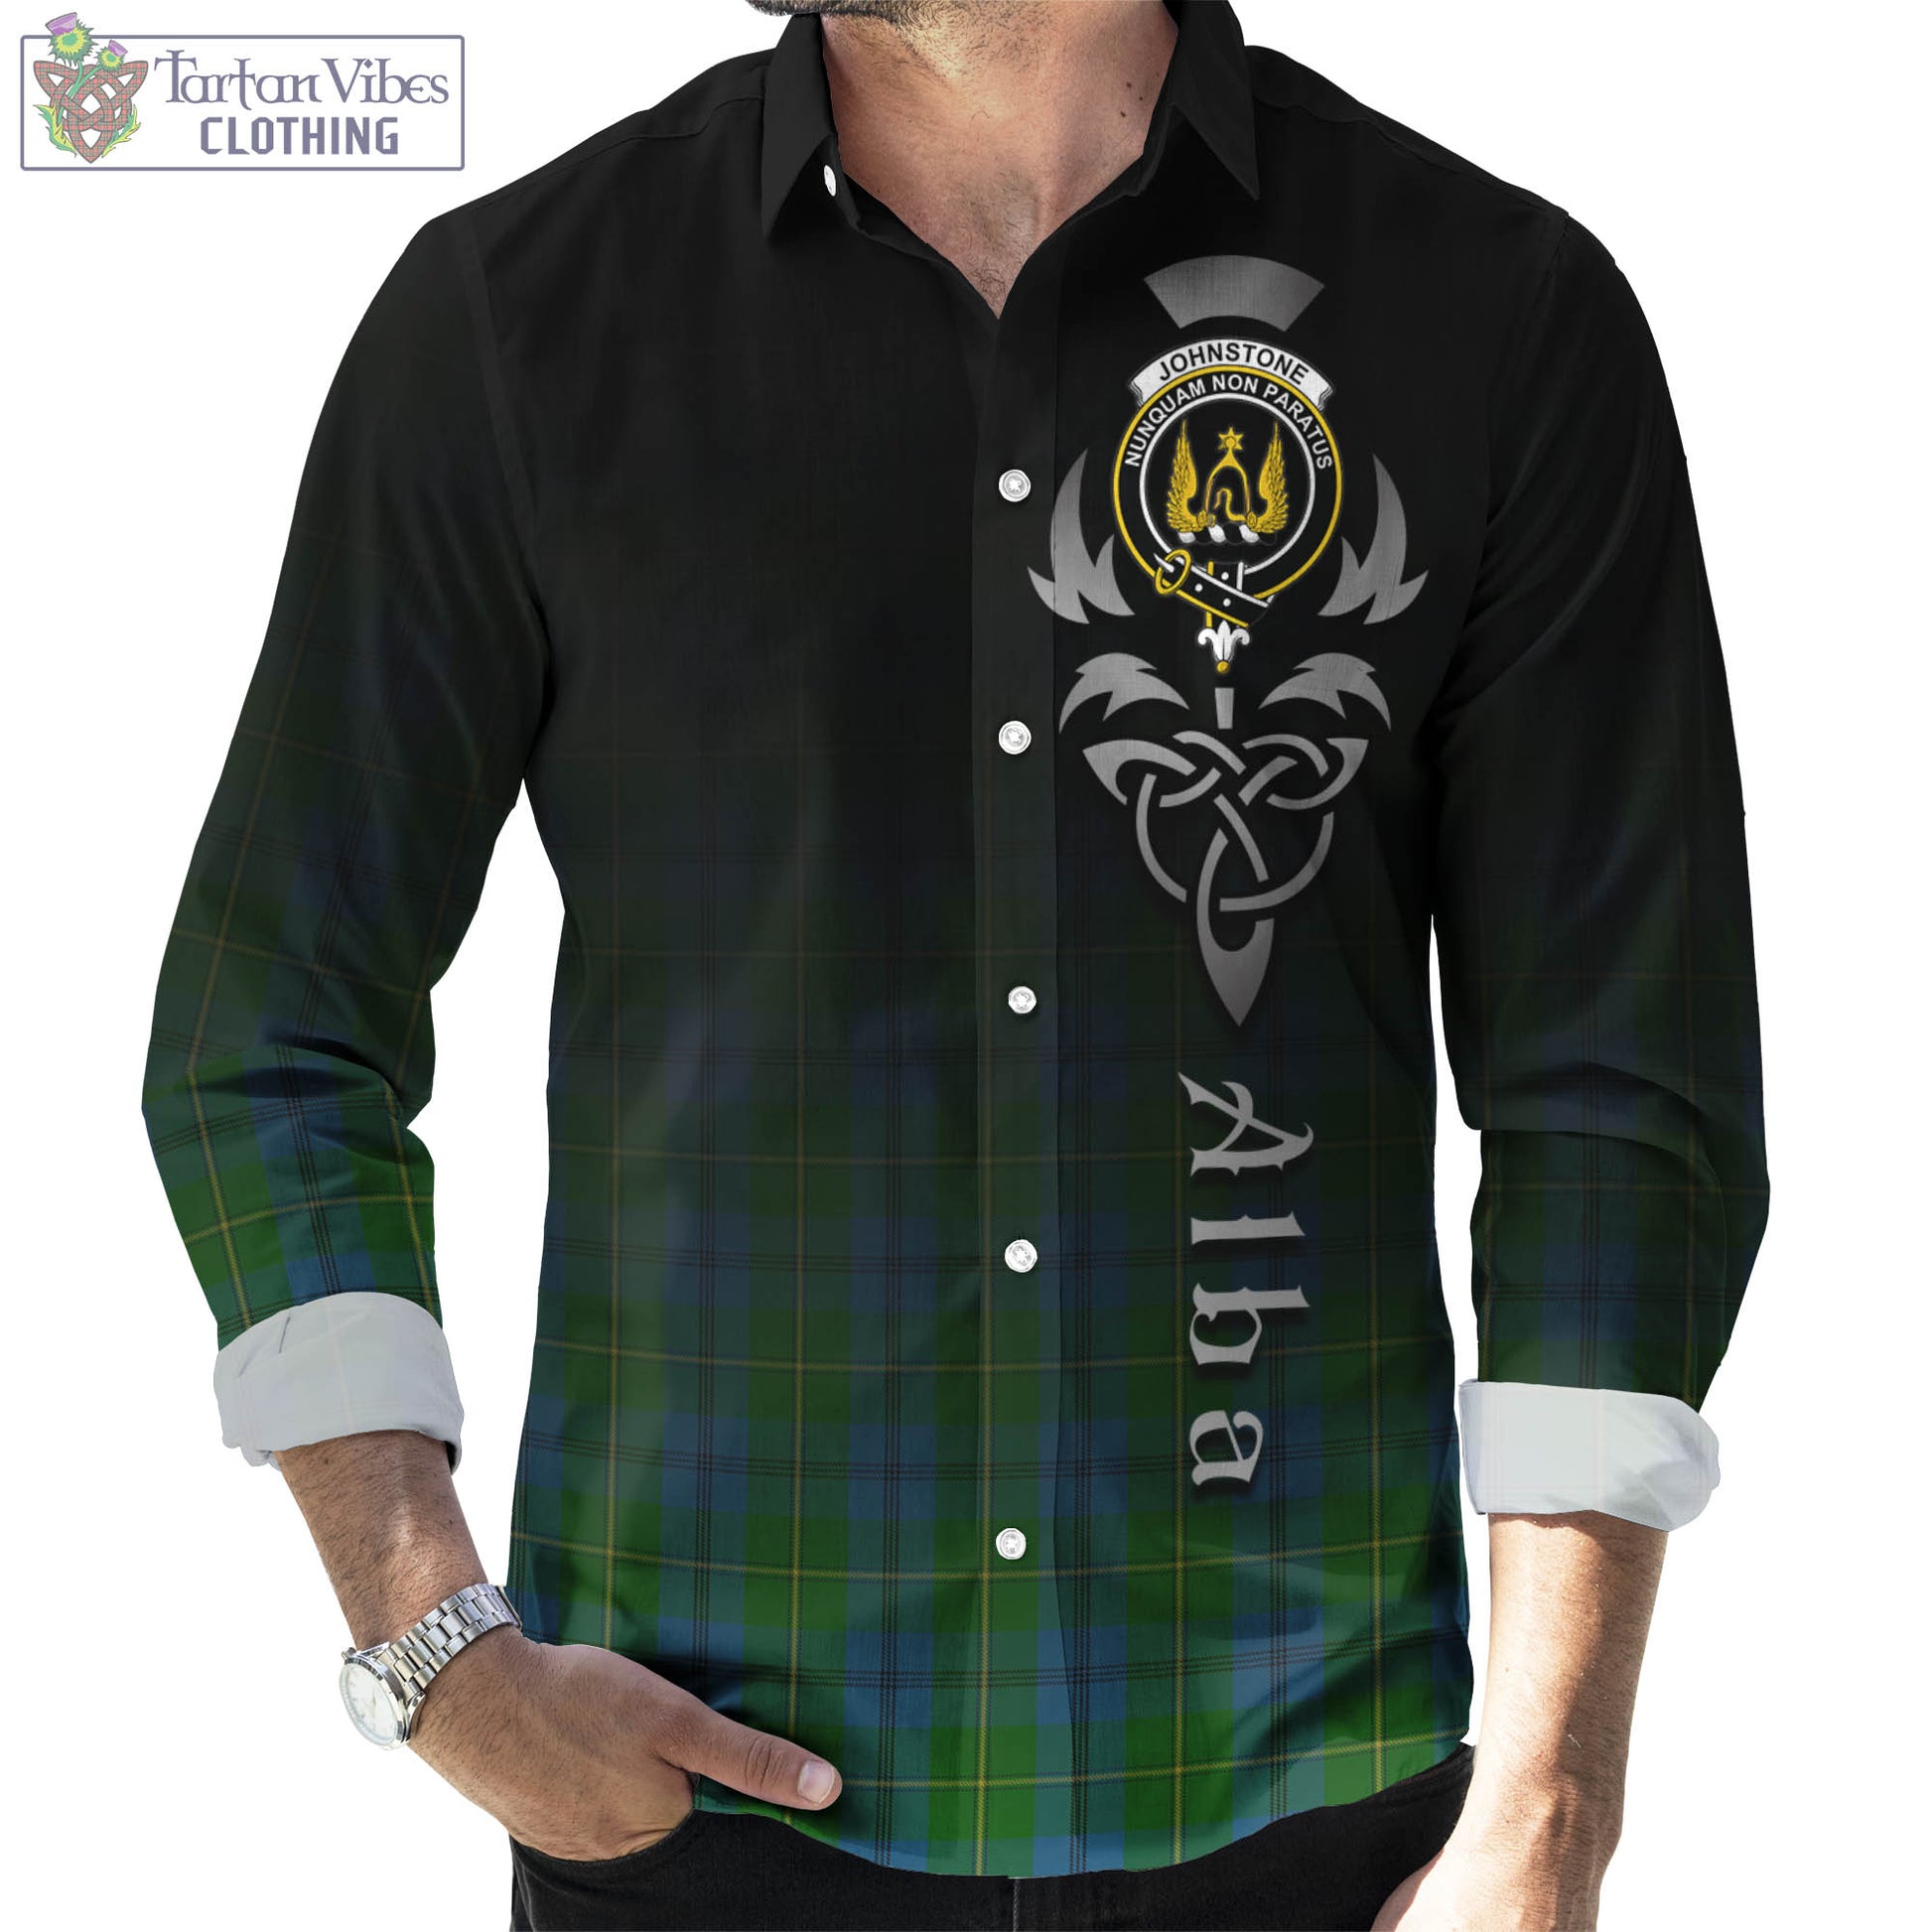 Tartan Vibes Clothing Johnstone-Johnston Tartan Long Sleeve Button Up Featuring Alba Gu Brath Family Crest Celtic Inspired